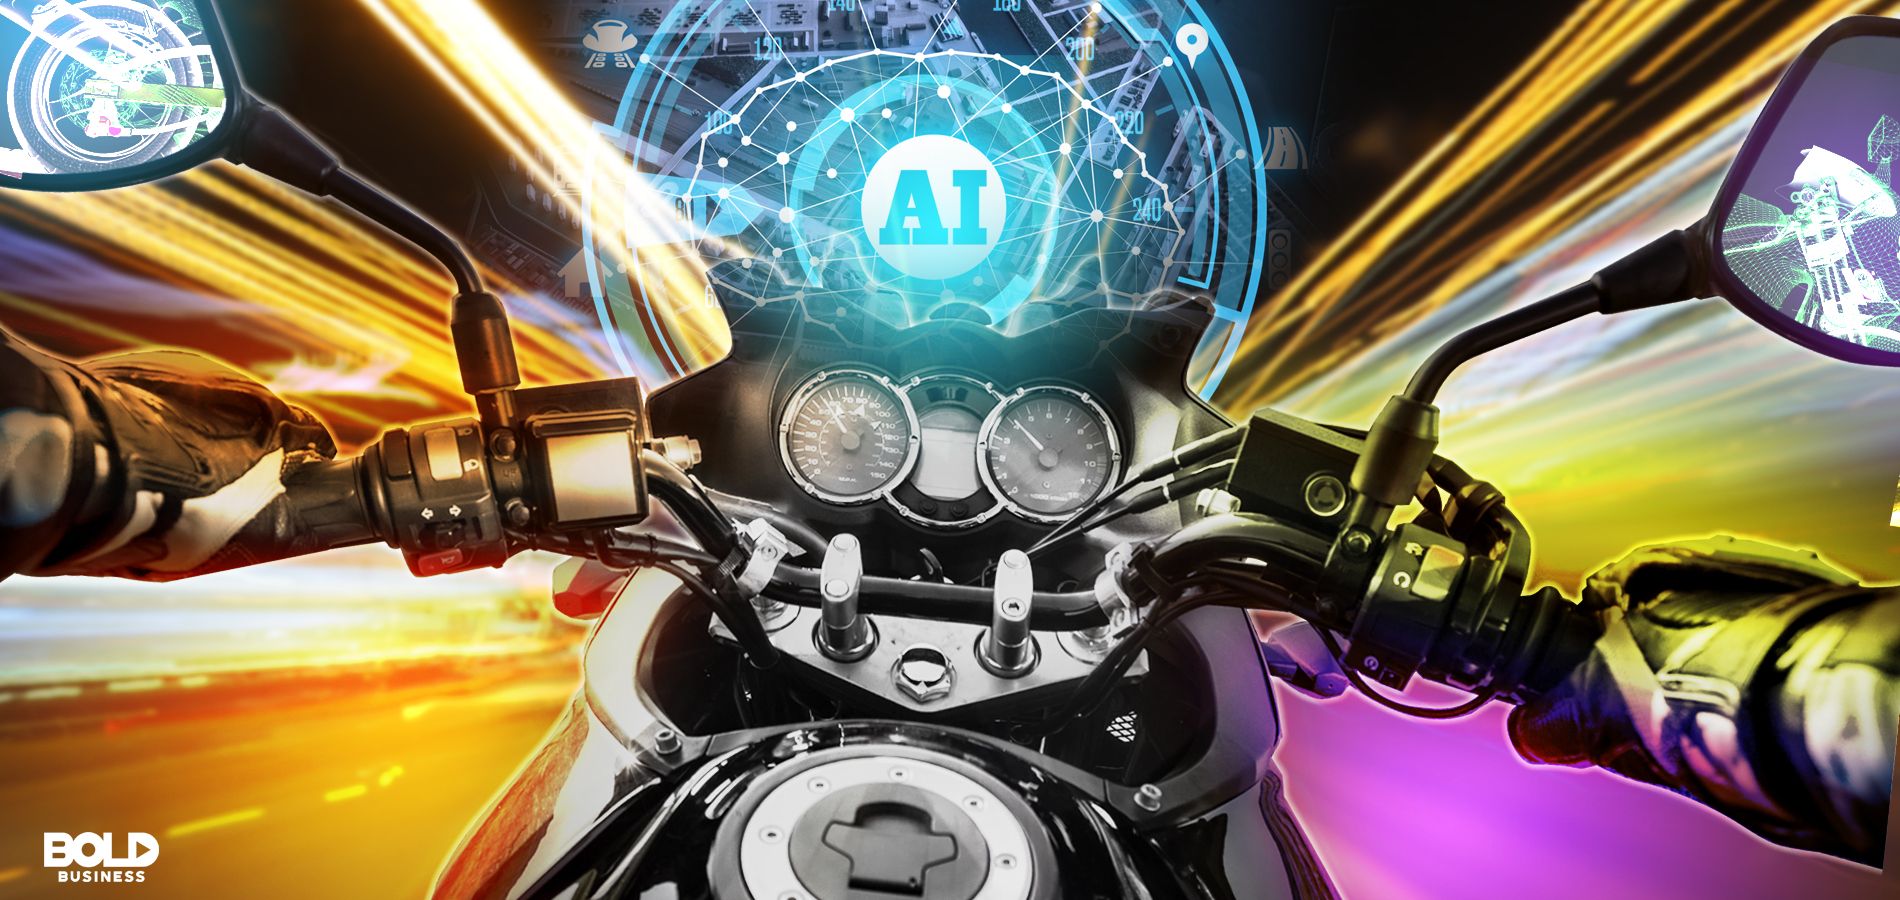 The Future Autonomous World of Motorcycles